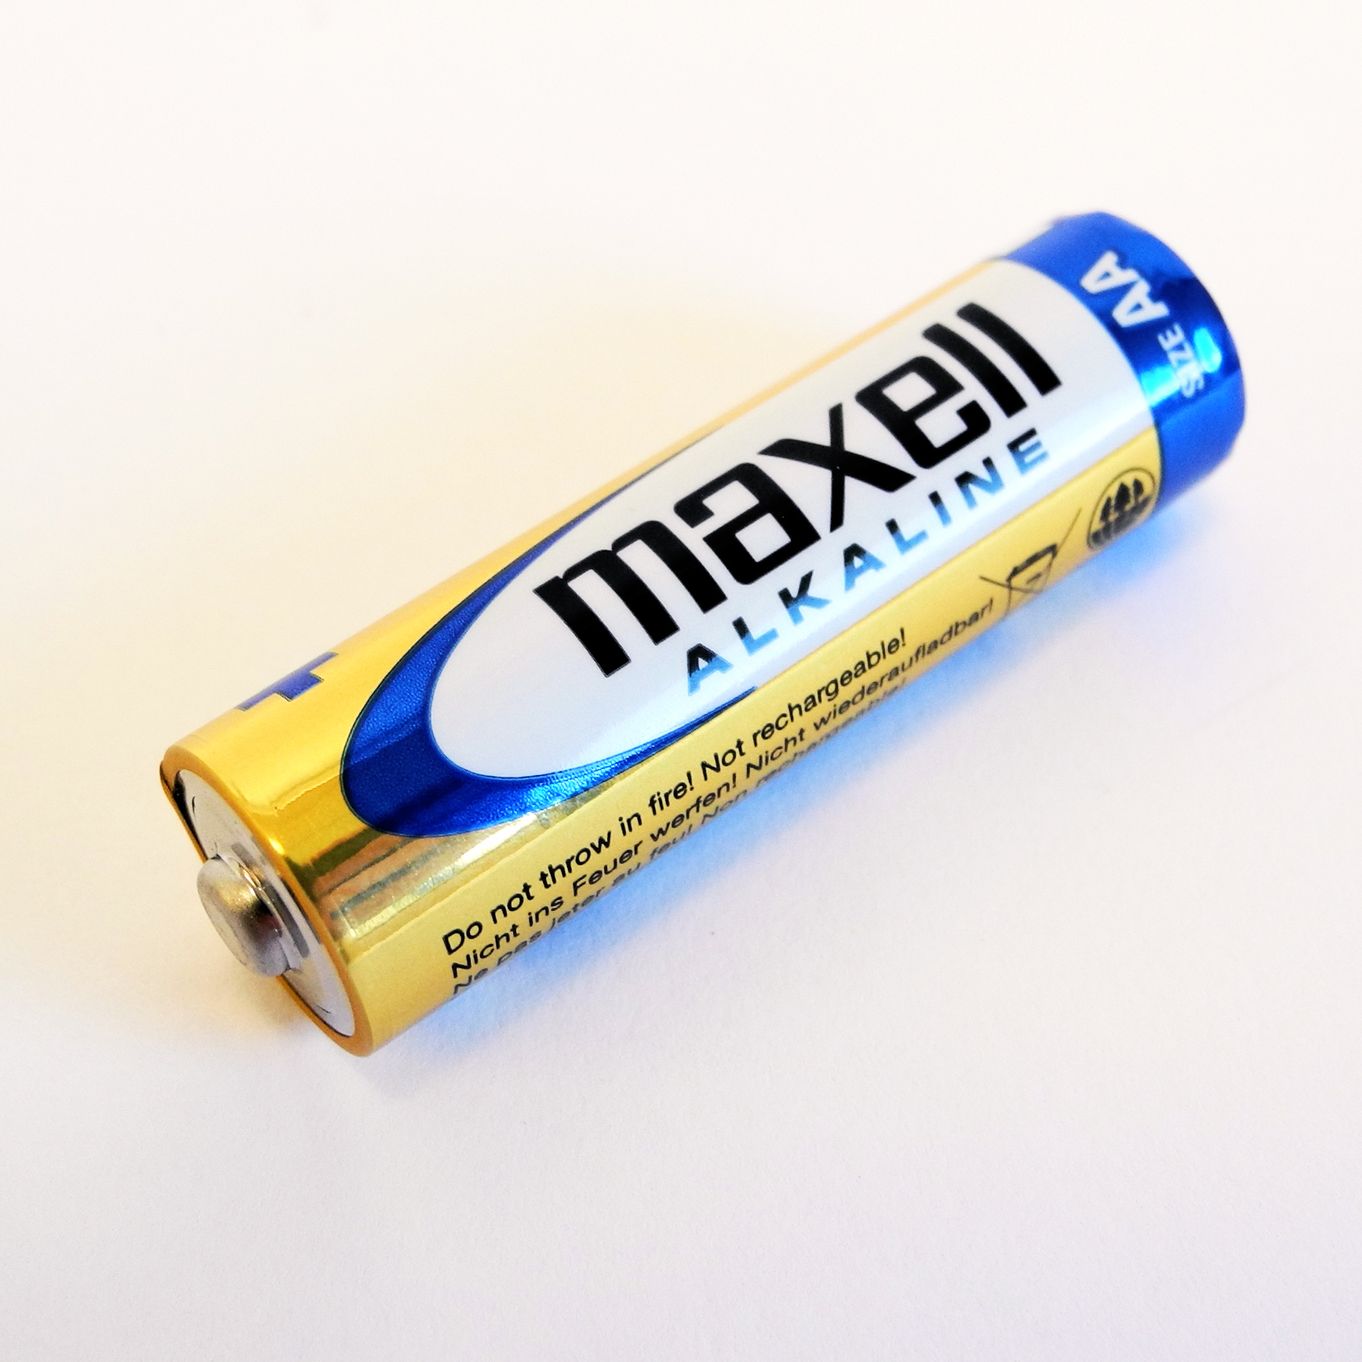 Maxell LR6 (AA) Alkaline Battery Batteries 4 pack - CB0123